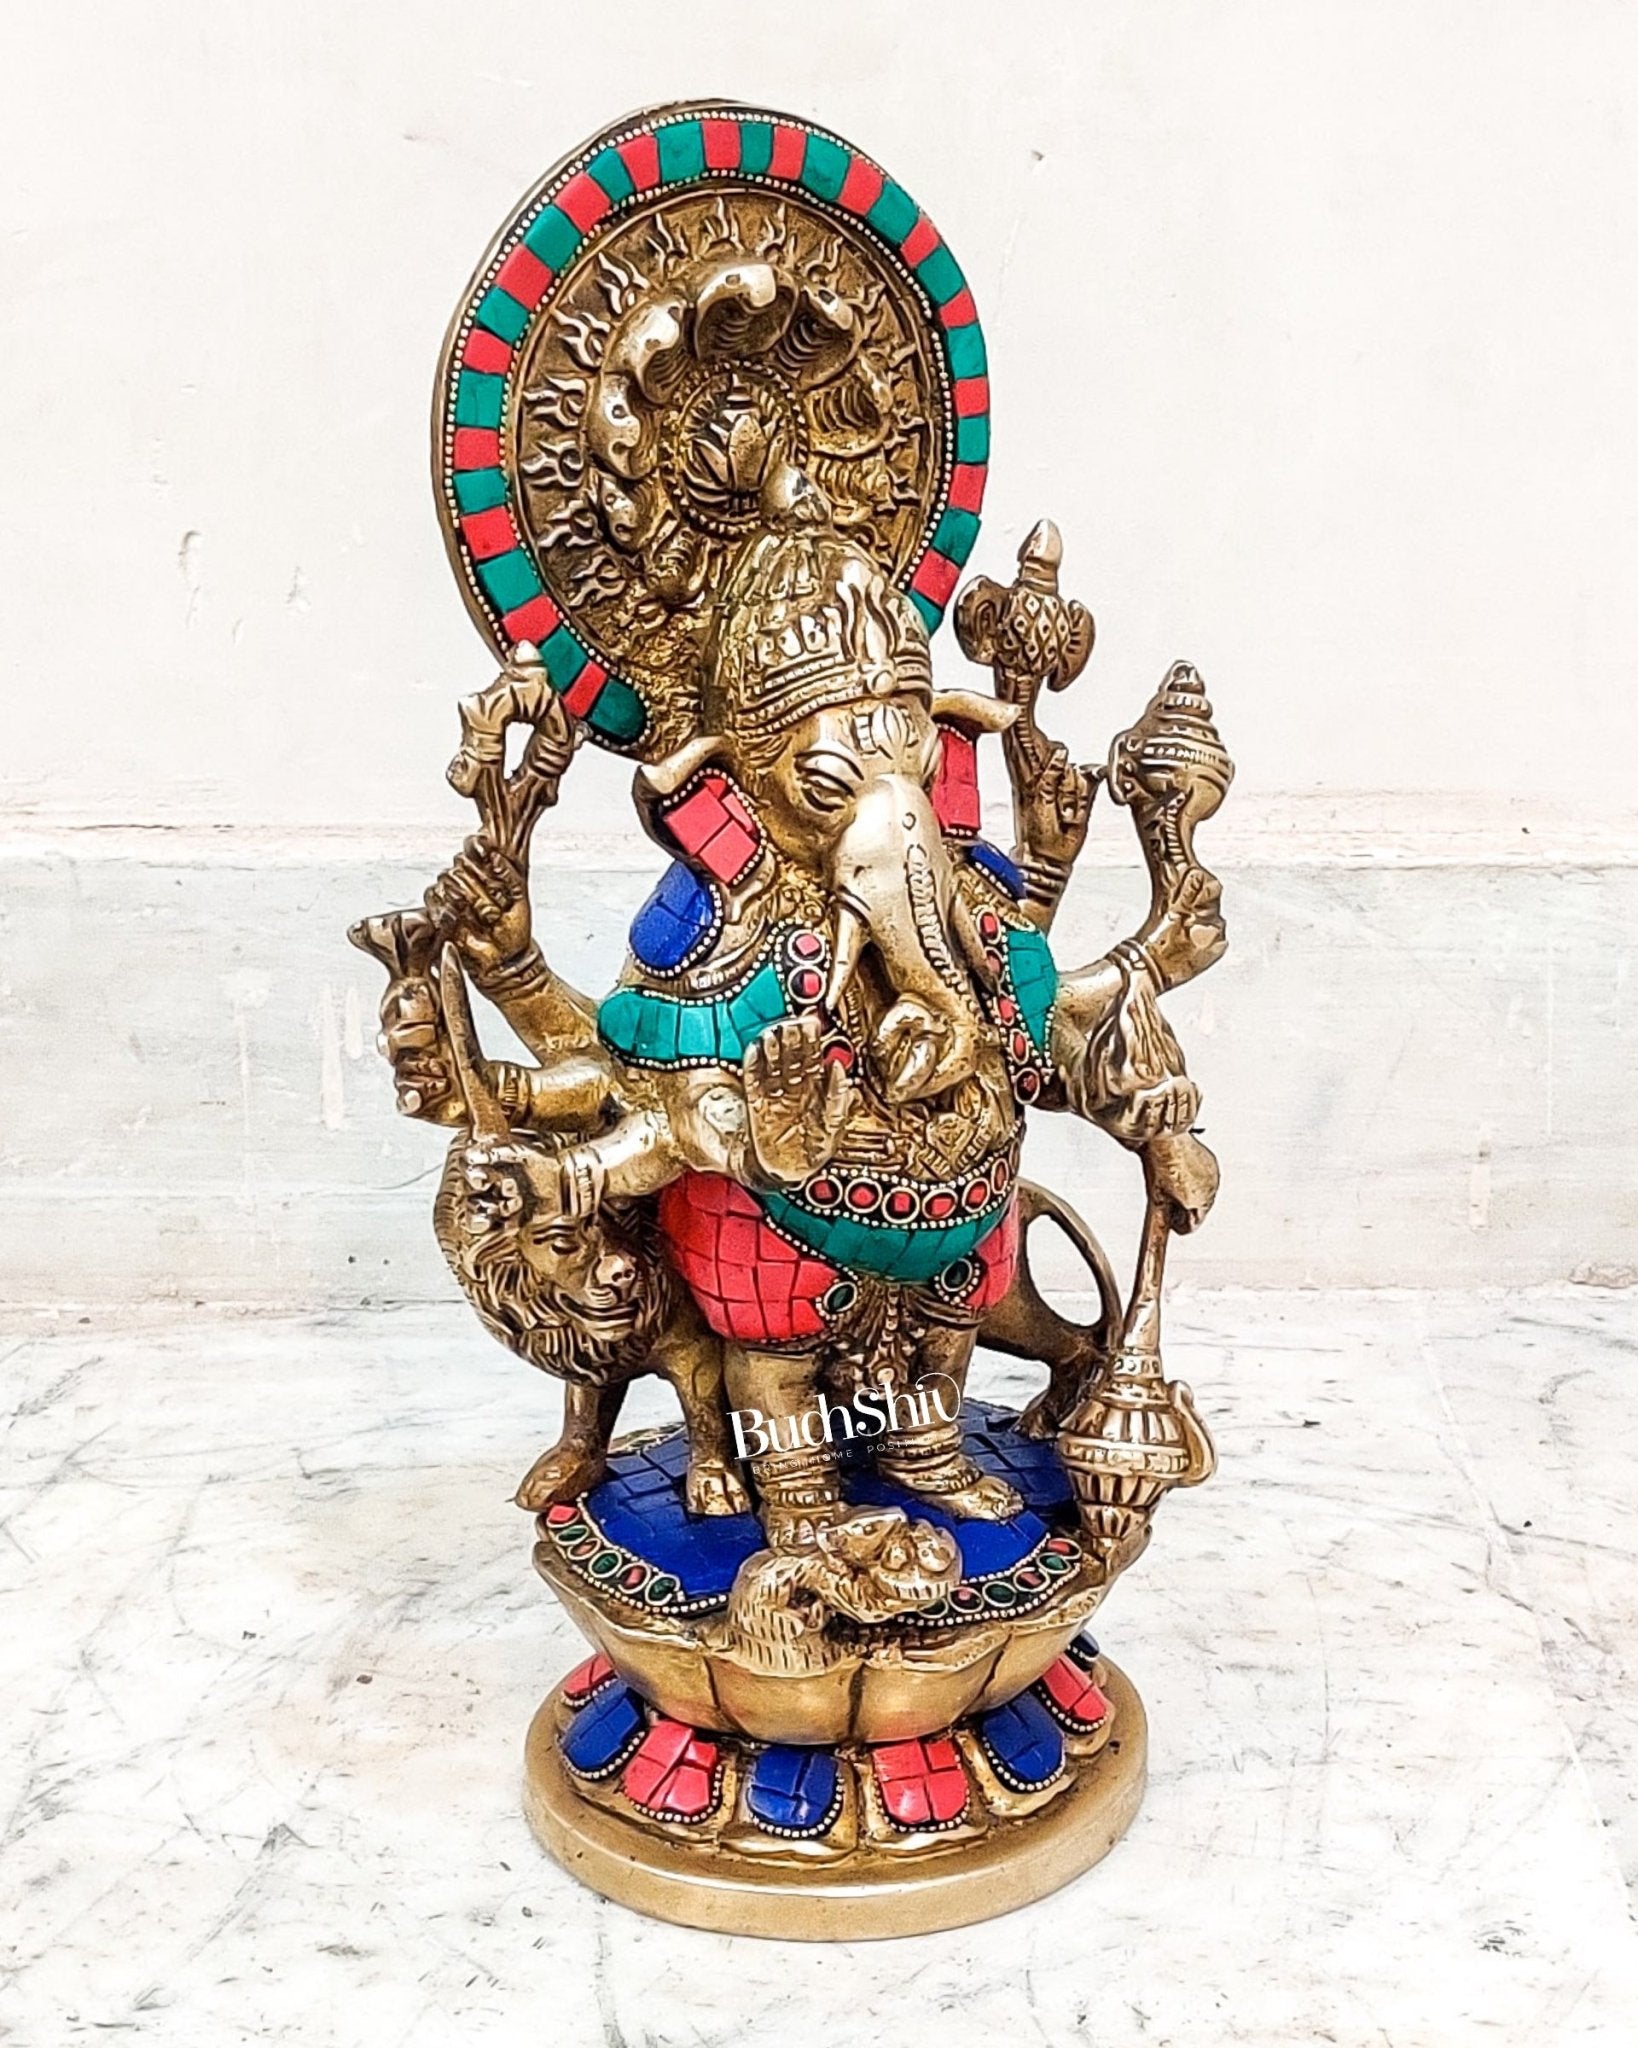 Handcrafted Dhrishti Ganesh Statue - Ward off Evil with Lord Ganesha Incarnation 12" - Budhshiv.com